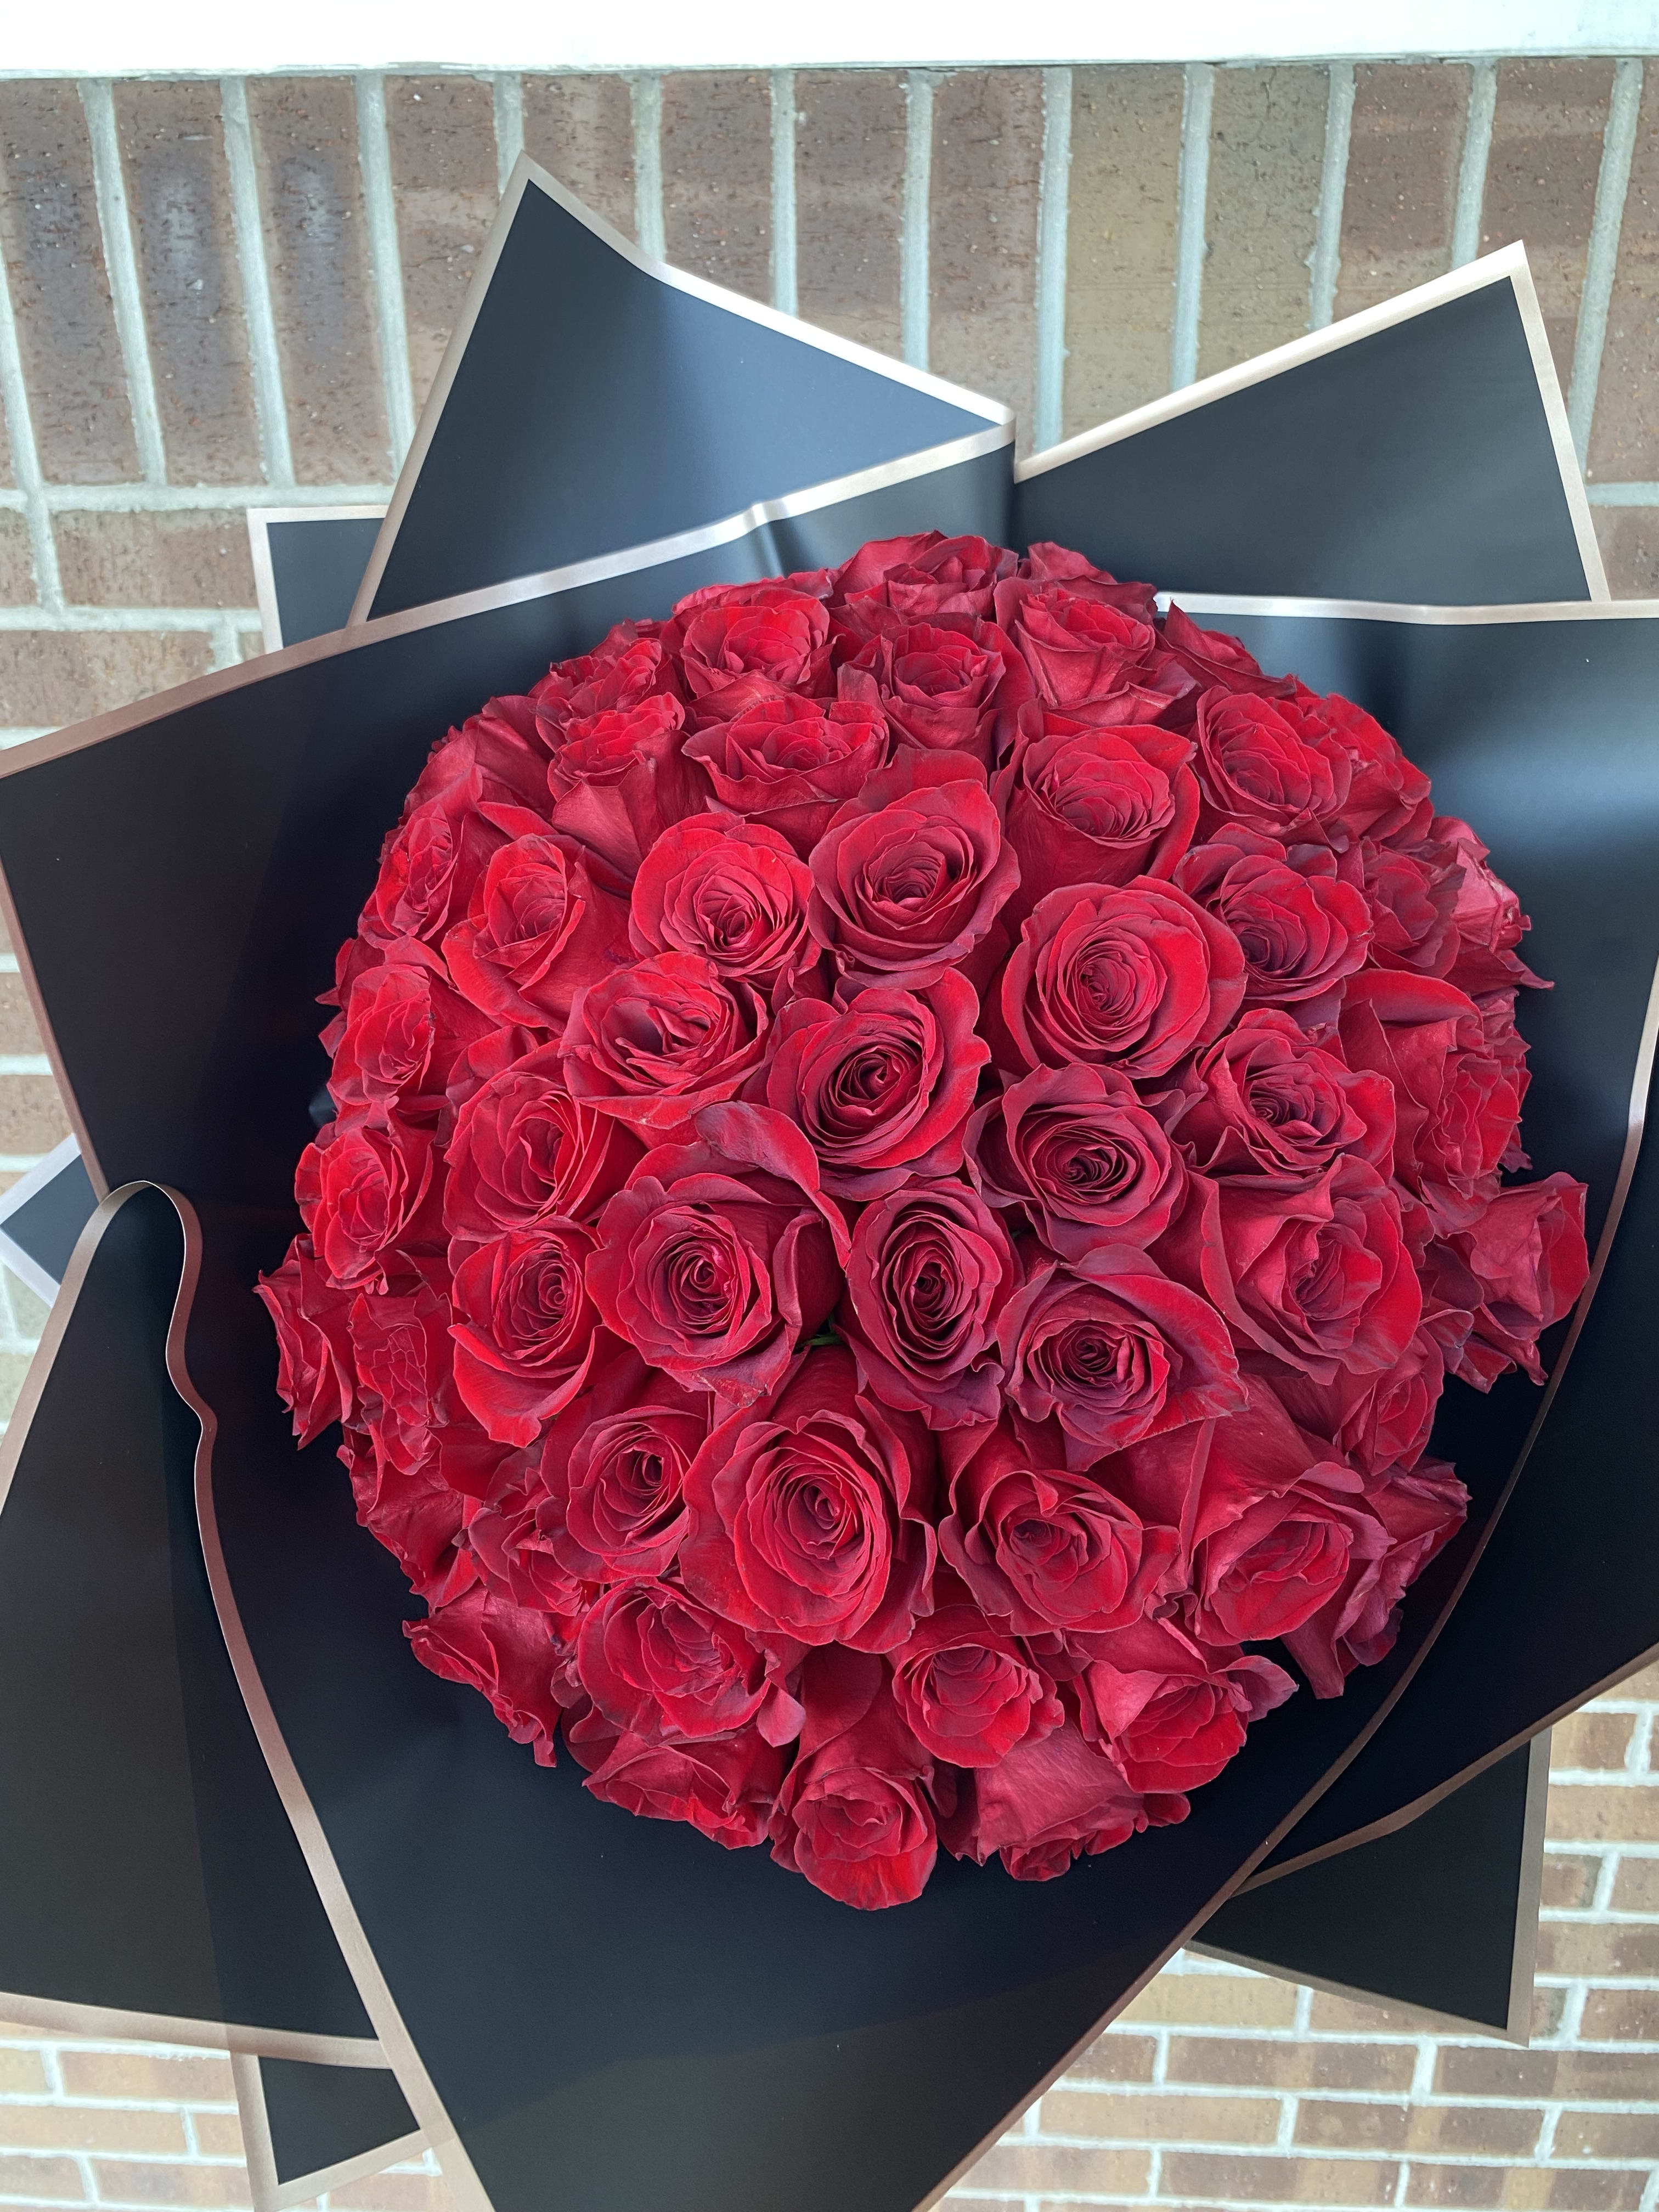 5 Dozen Red Rose Bouquet by Vivid Flowers